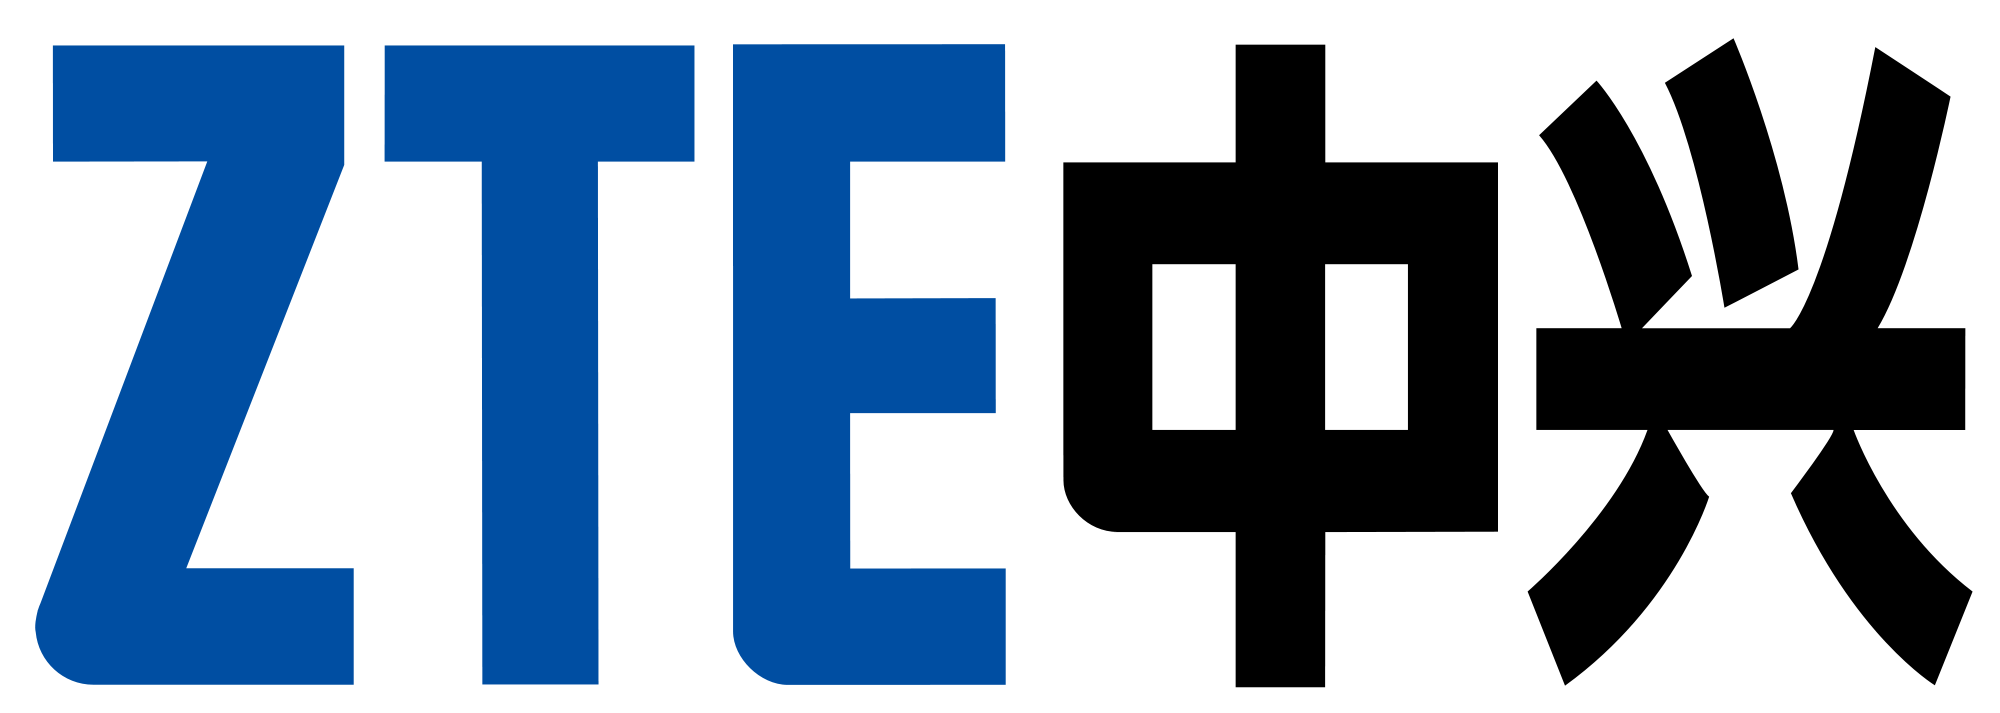 Zte Corp Brand Logo